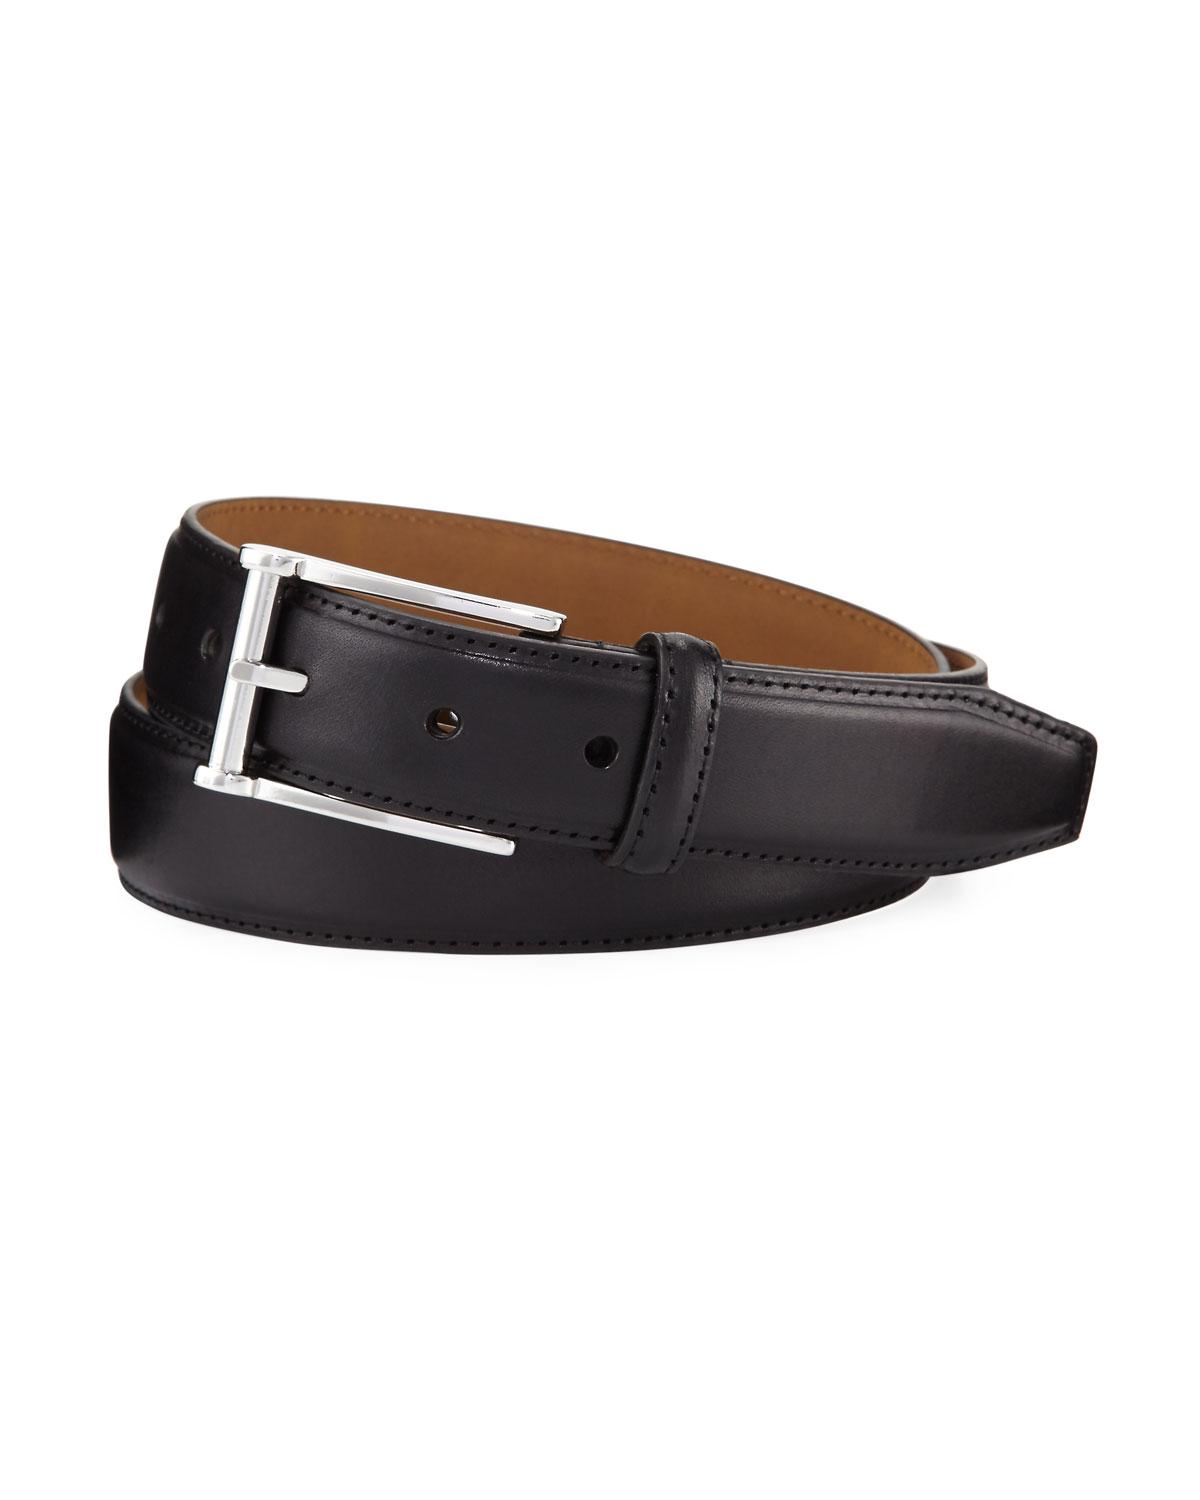 Neiman Marcus Italian Leather Belt in Black for Men - Lyst